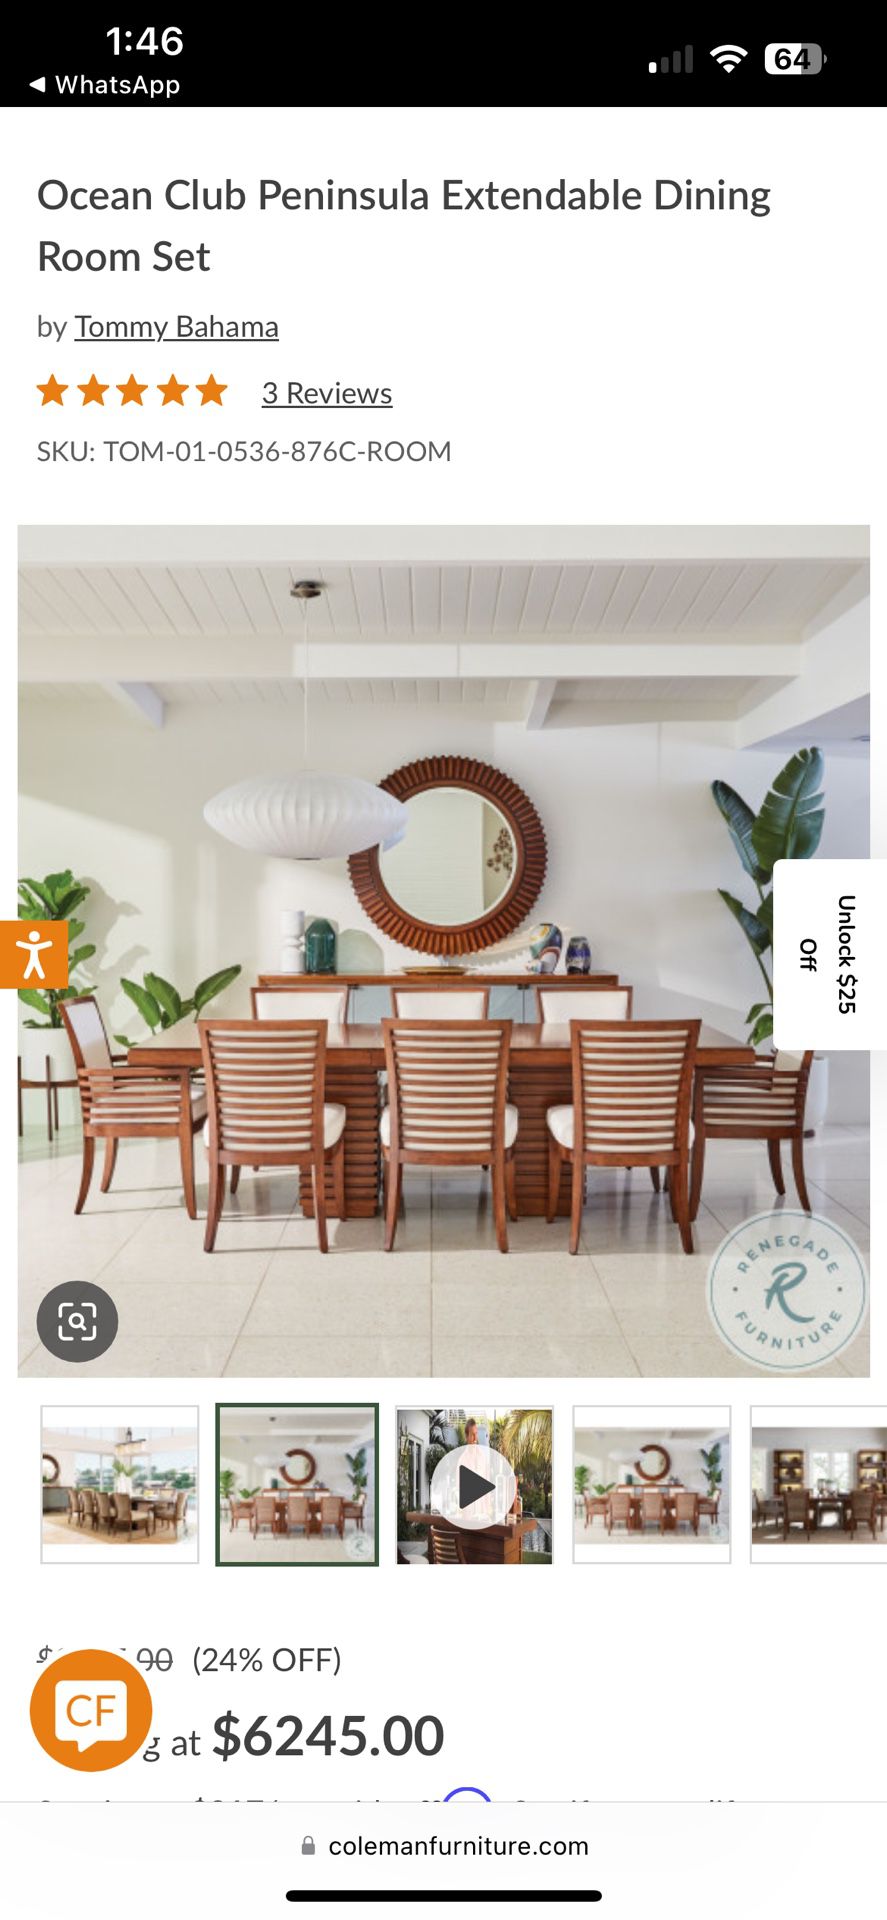 Tommy Bahama Ocean Club Peninsula Extendable Dining Room Set